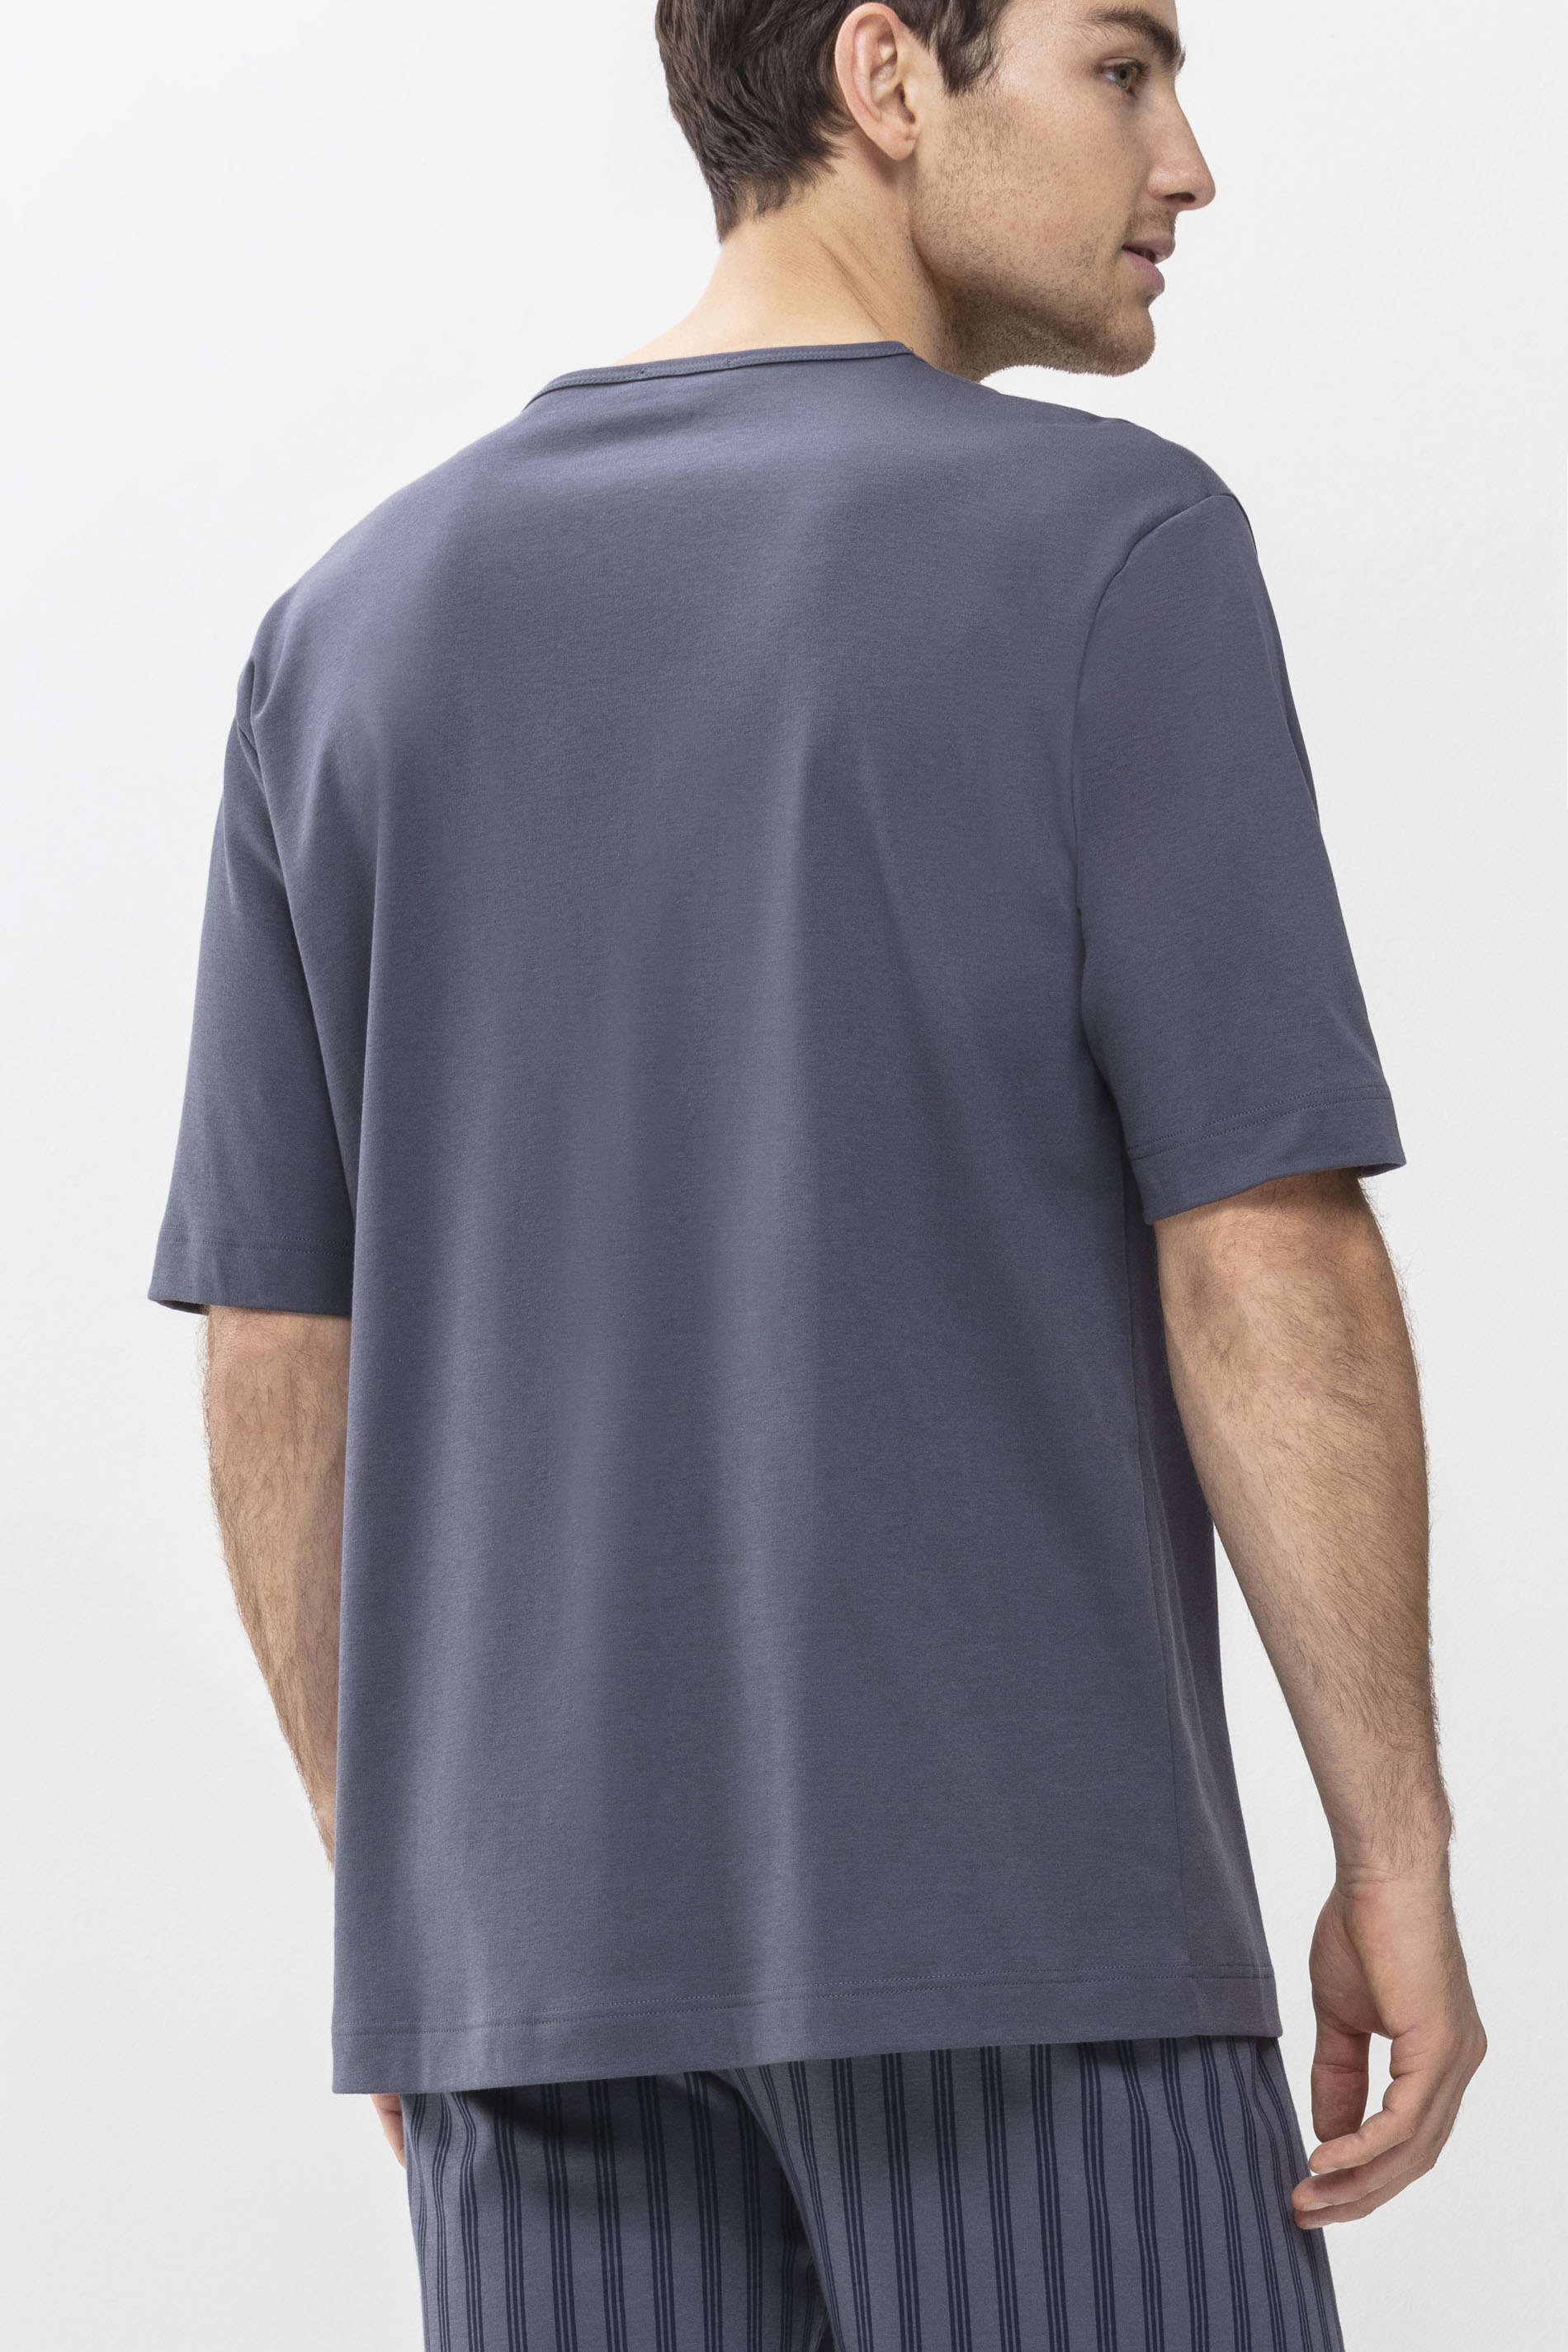 Shirt Soft Grey Serie Melton Achteraanzicht | mey®